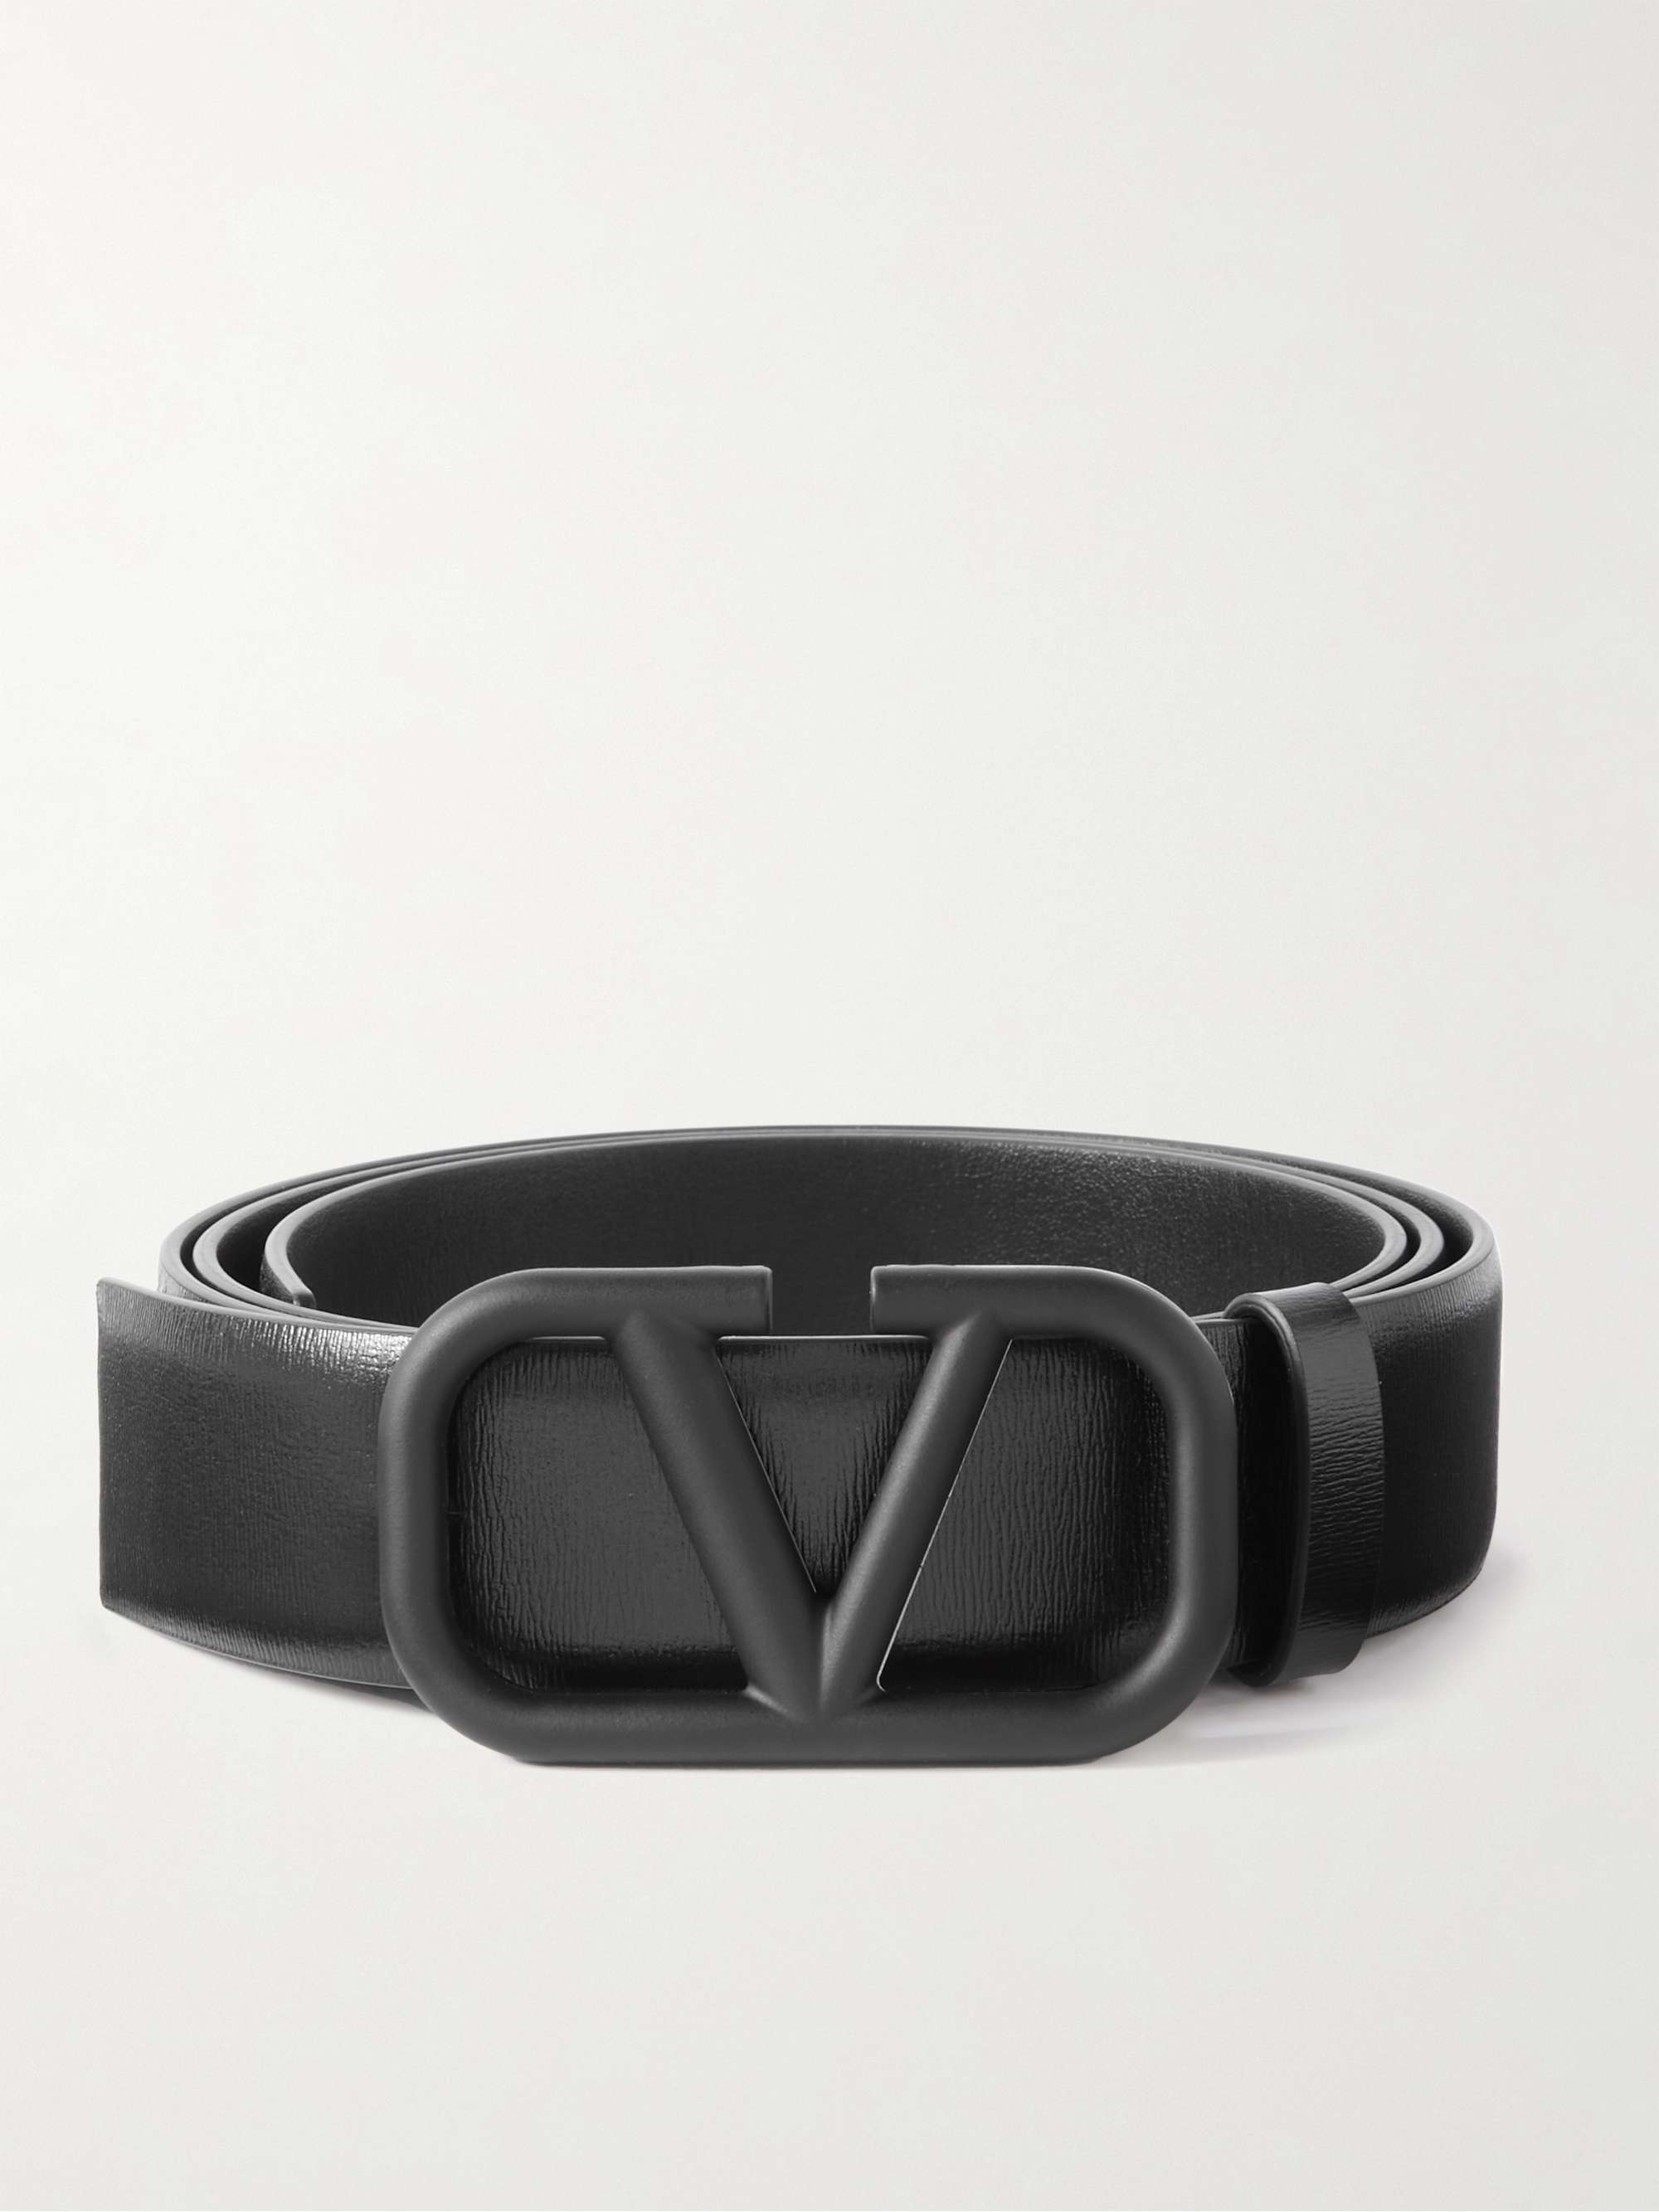 VLogo 3cm Leather Belt